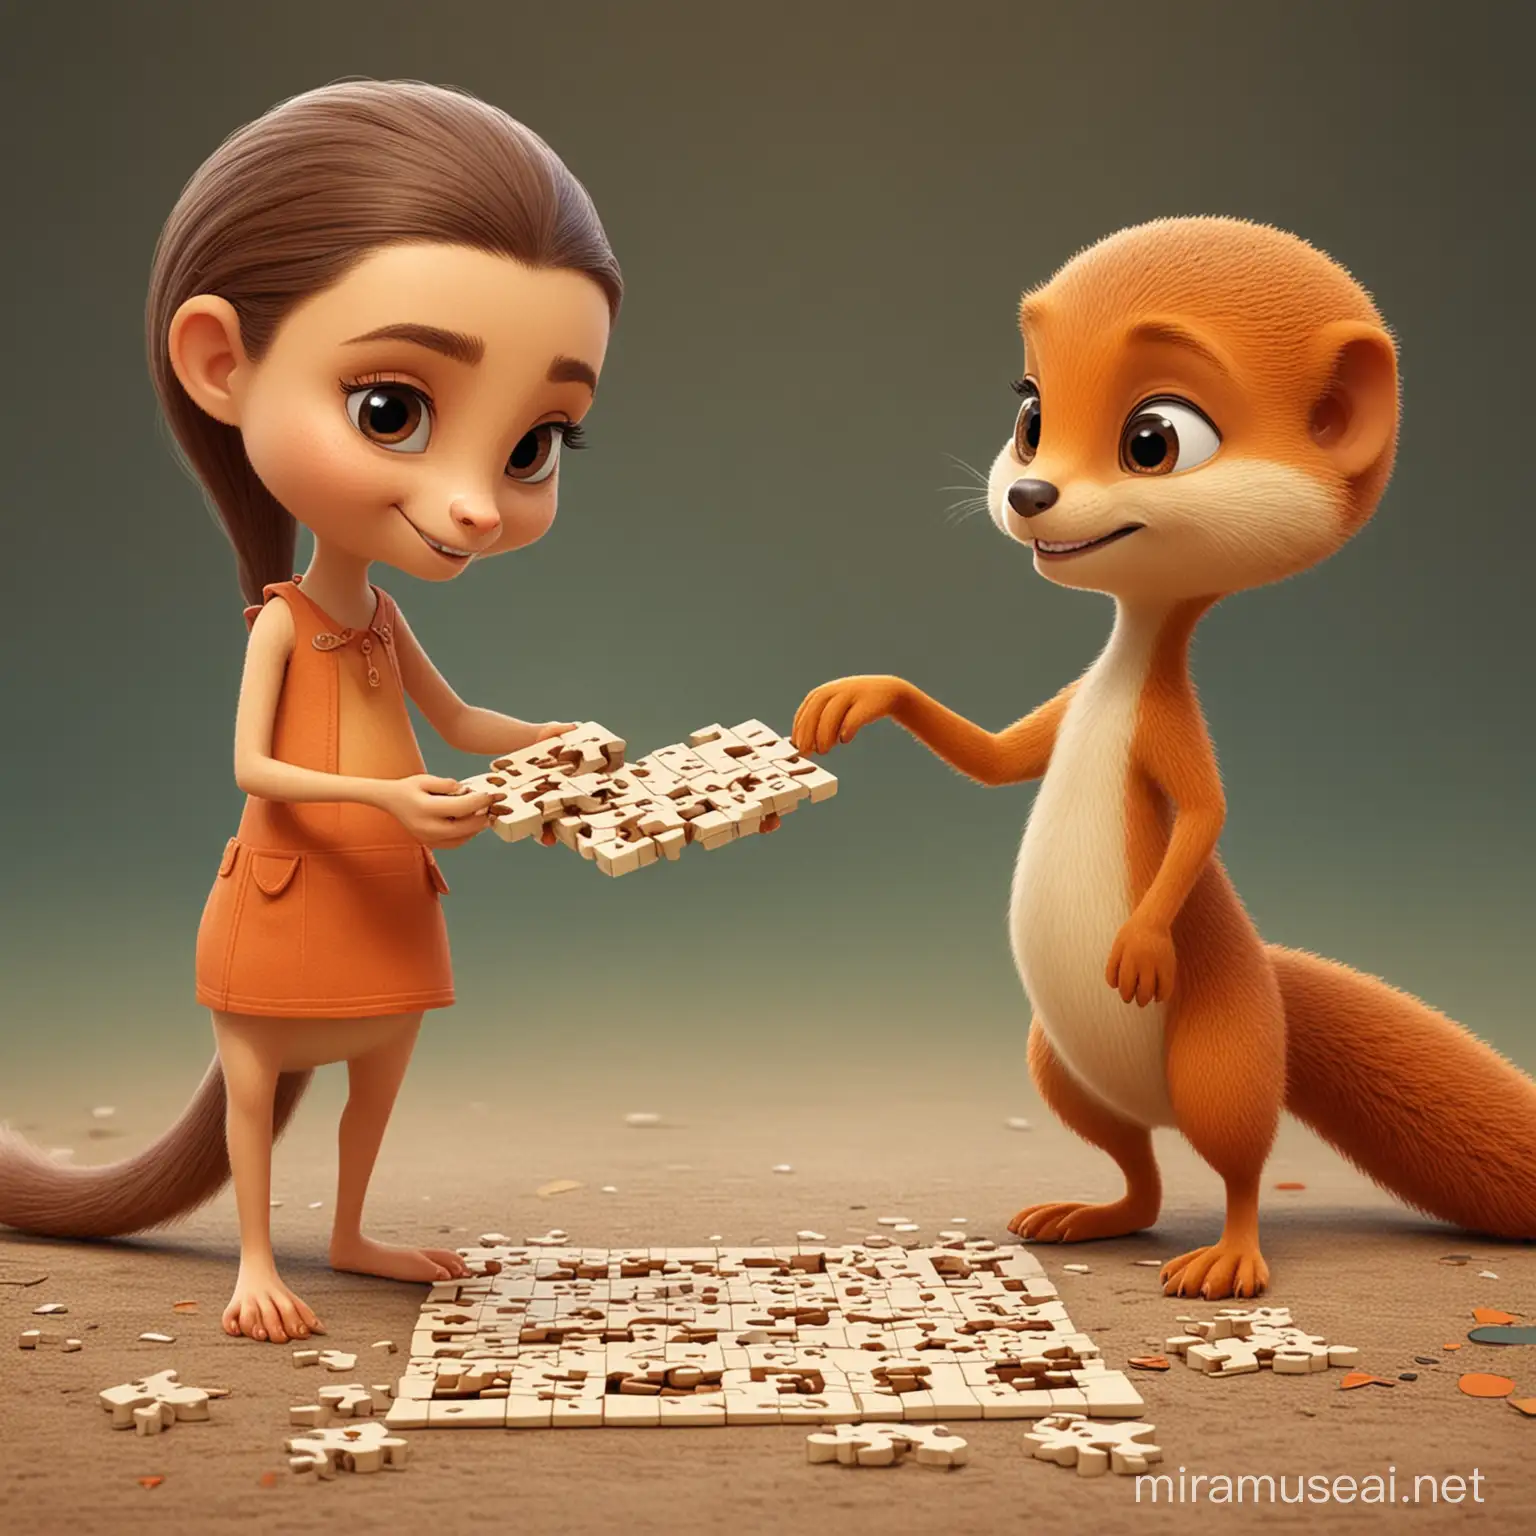 cute female cartoon mongoose doing a puzzle with a cartoon human female friend 

